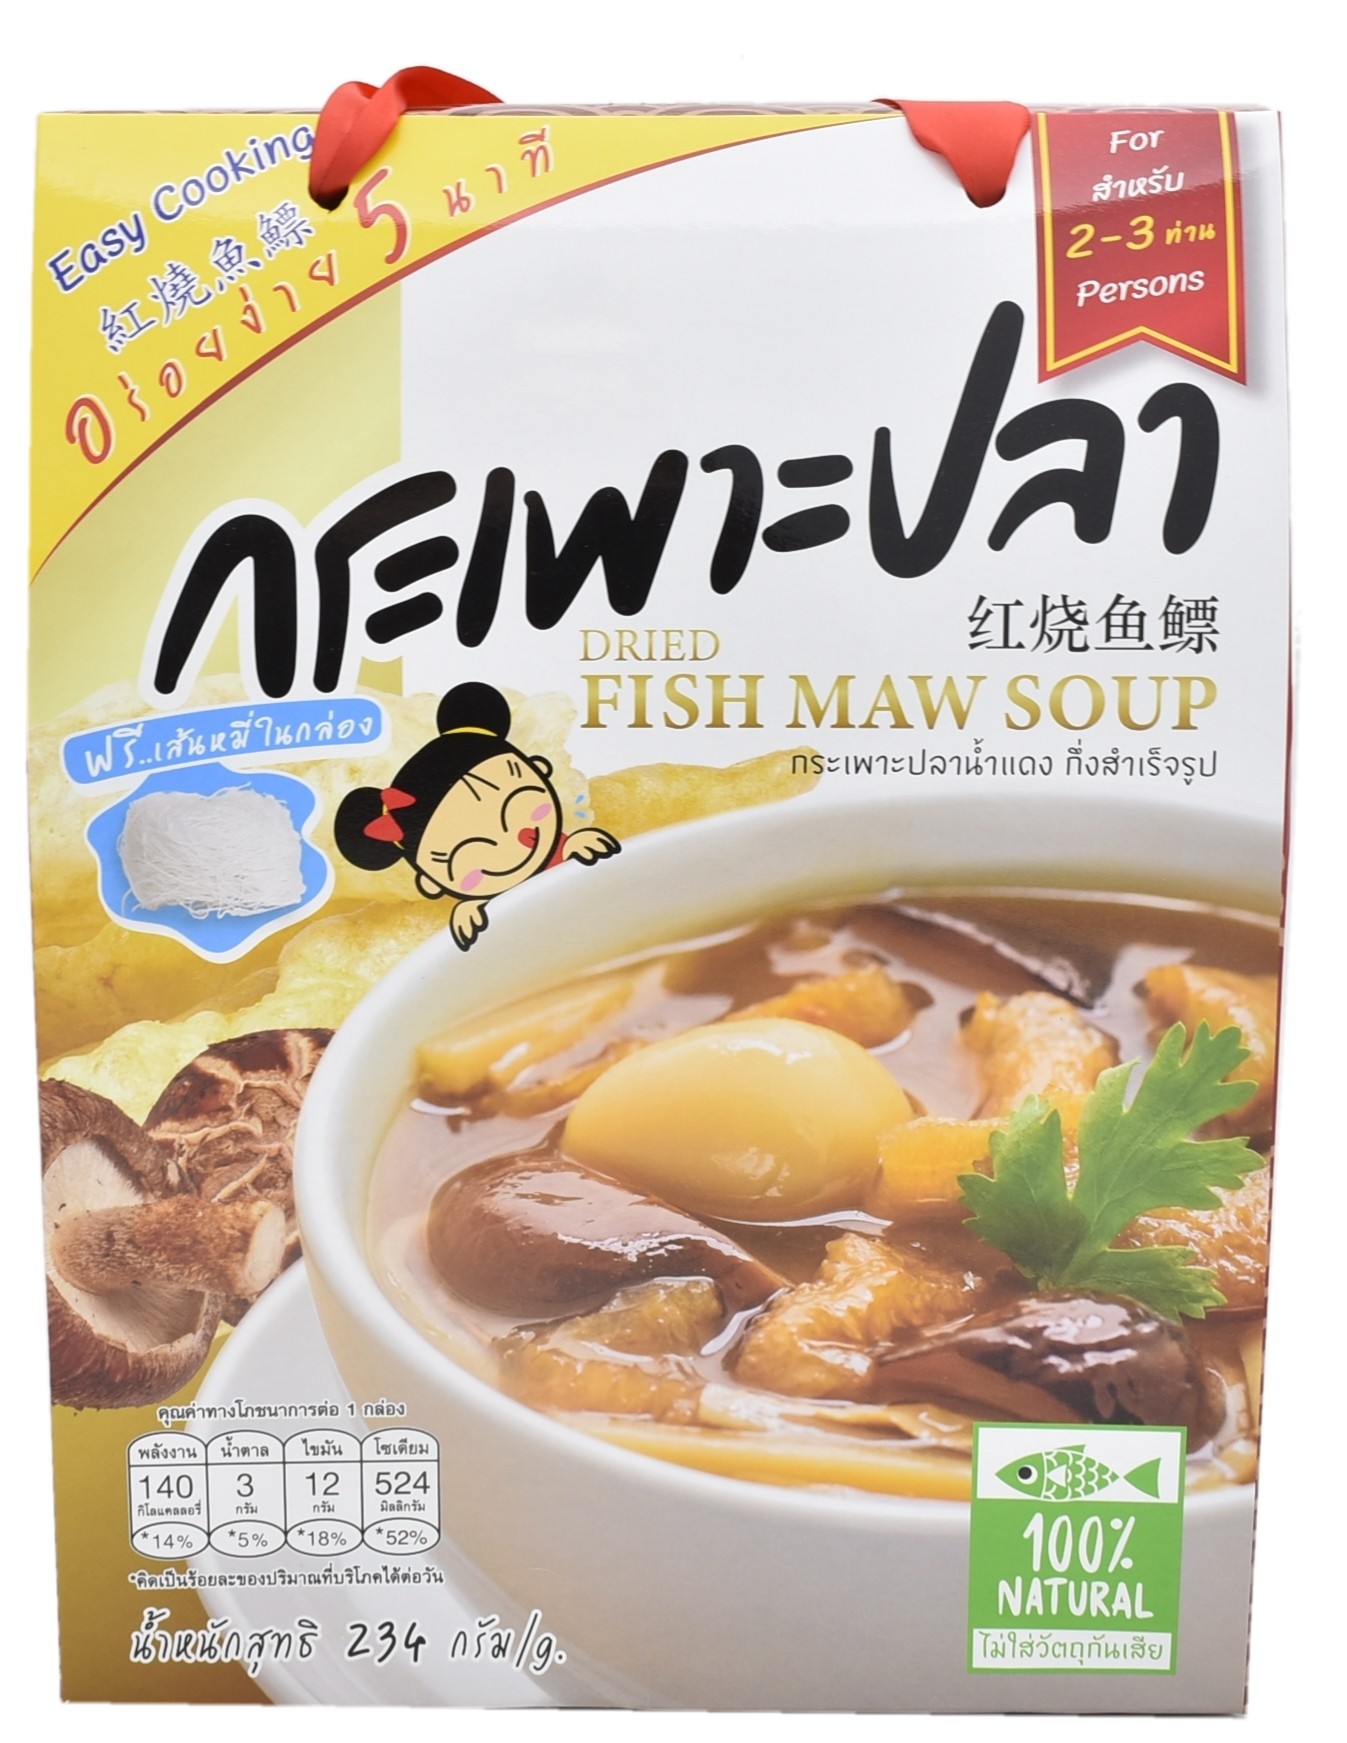 Fish maw soup